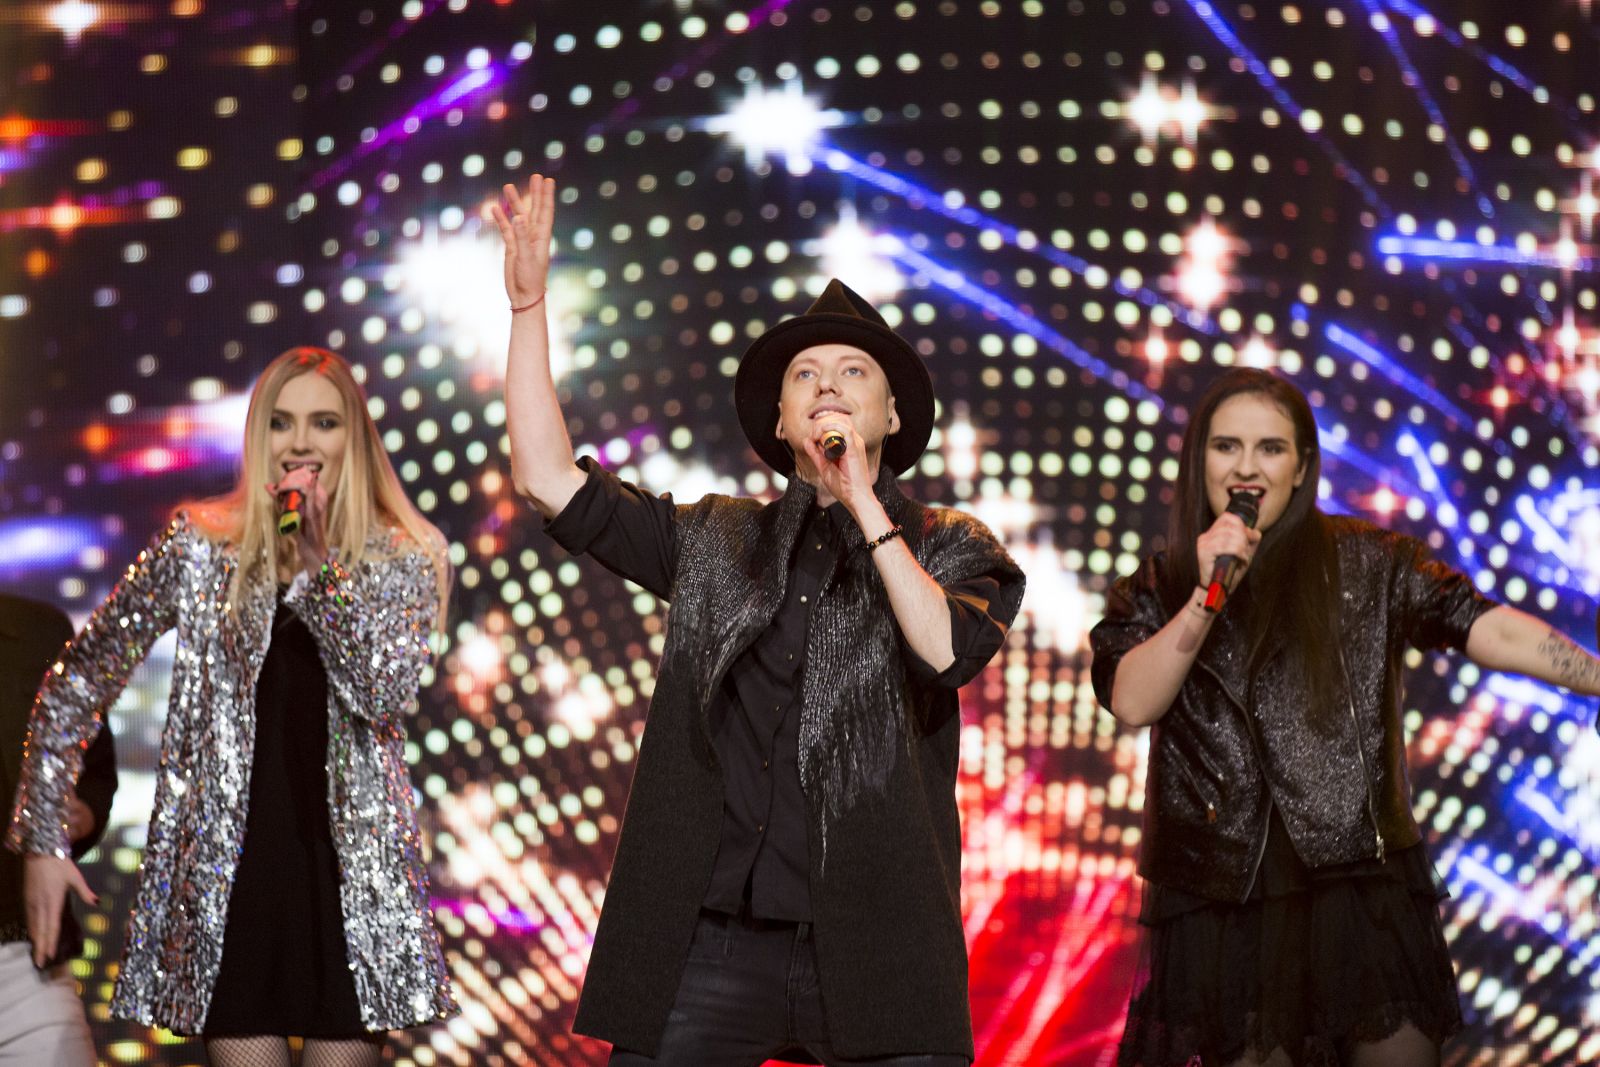 Lithuania 2017 Eurovizijos Week 1 Sasha Song and five others qualify ...